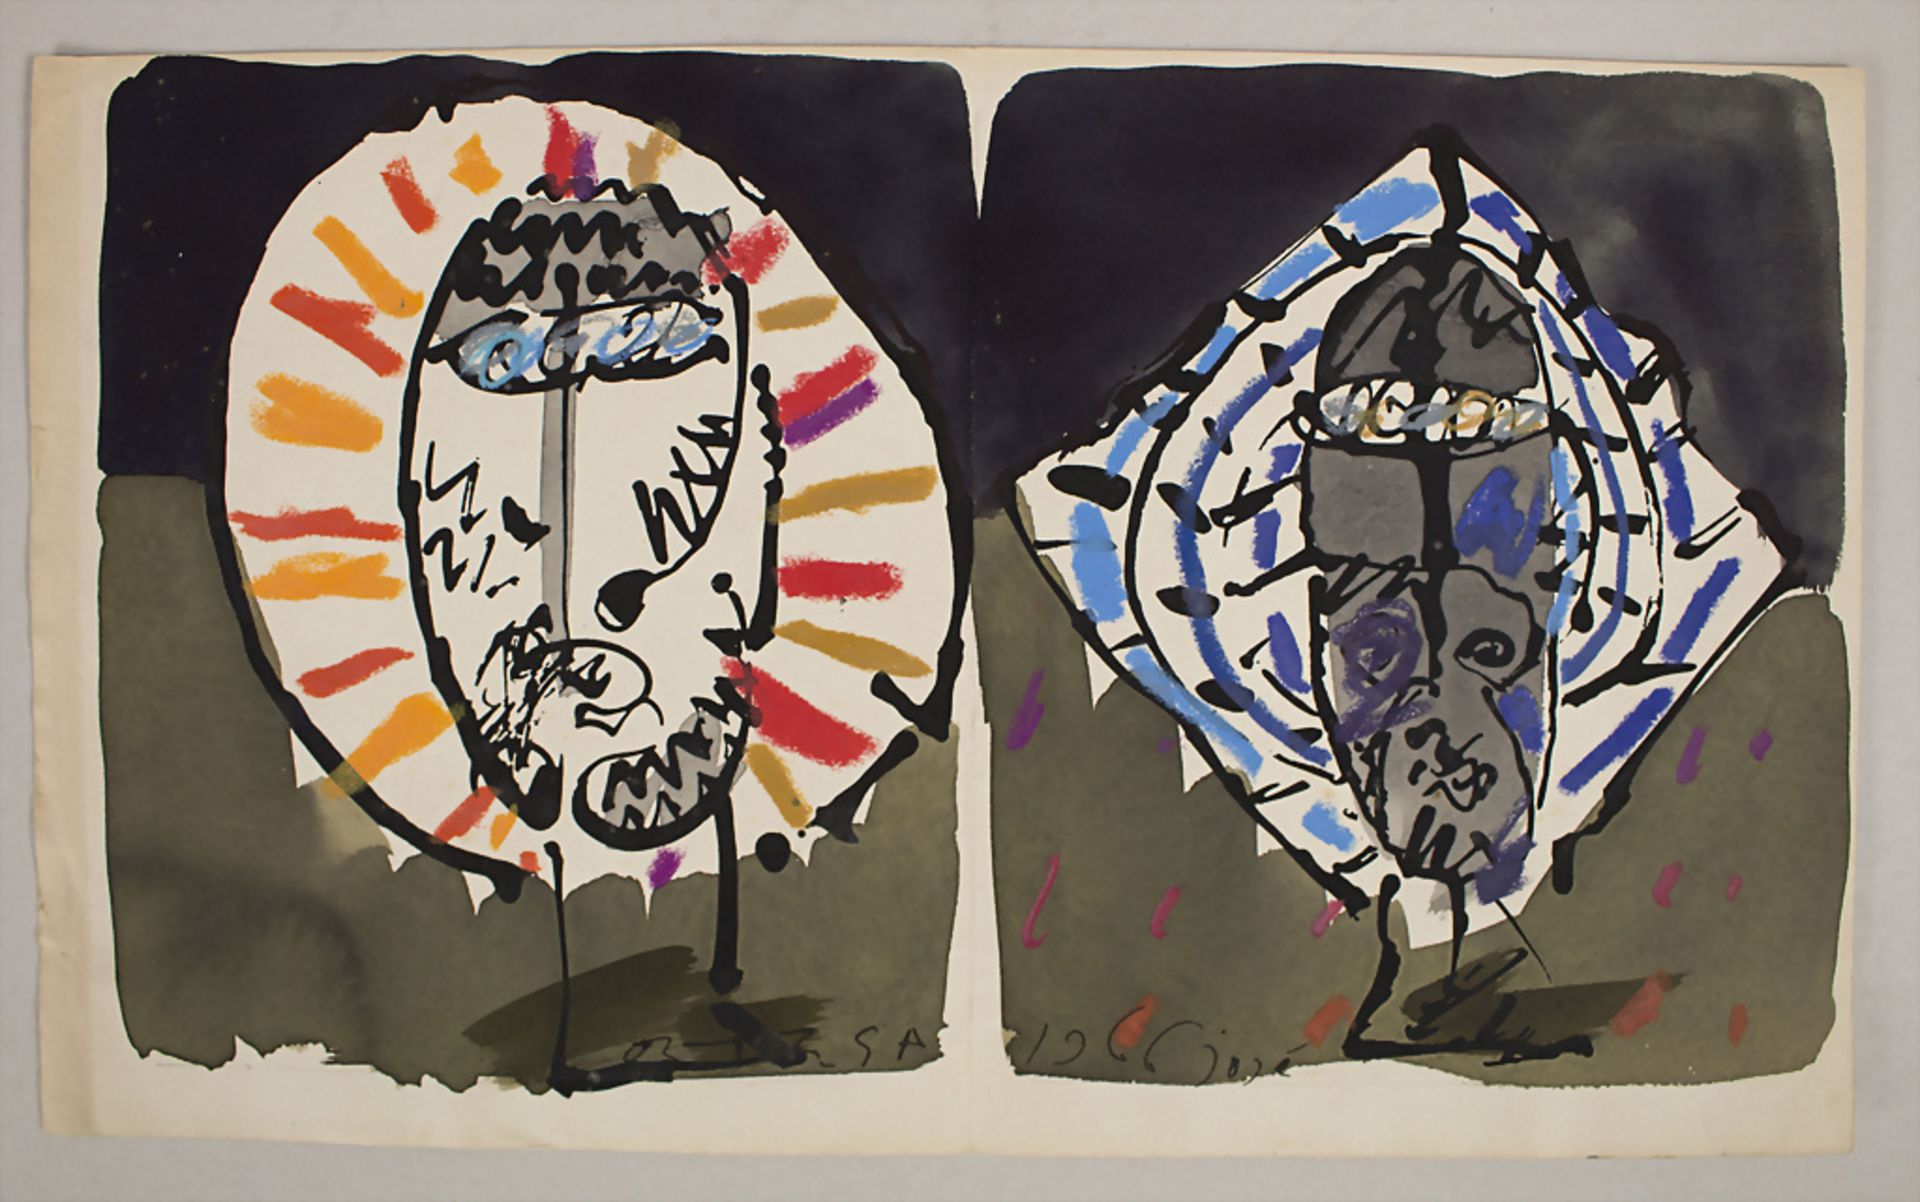 José Ortega (1921-1990), 'Rostros' / 'Faces', 1966